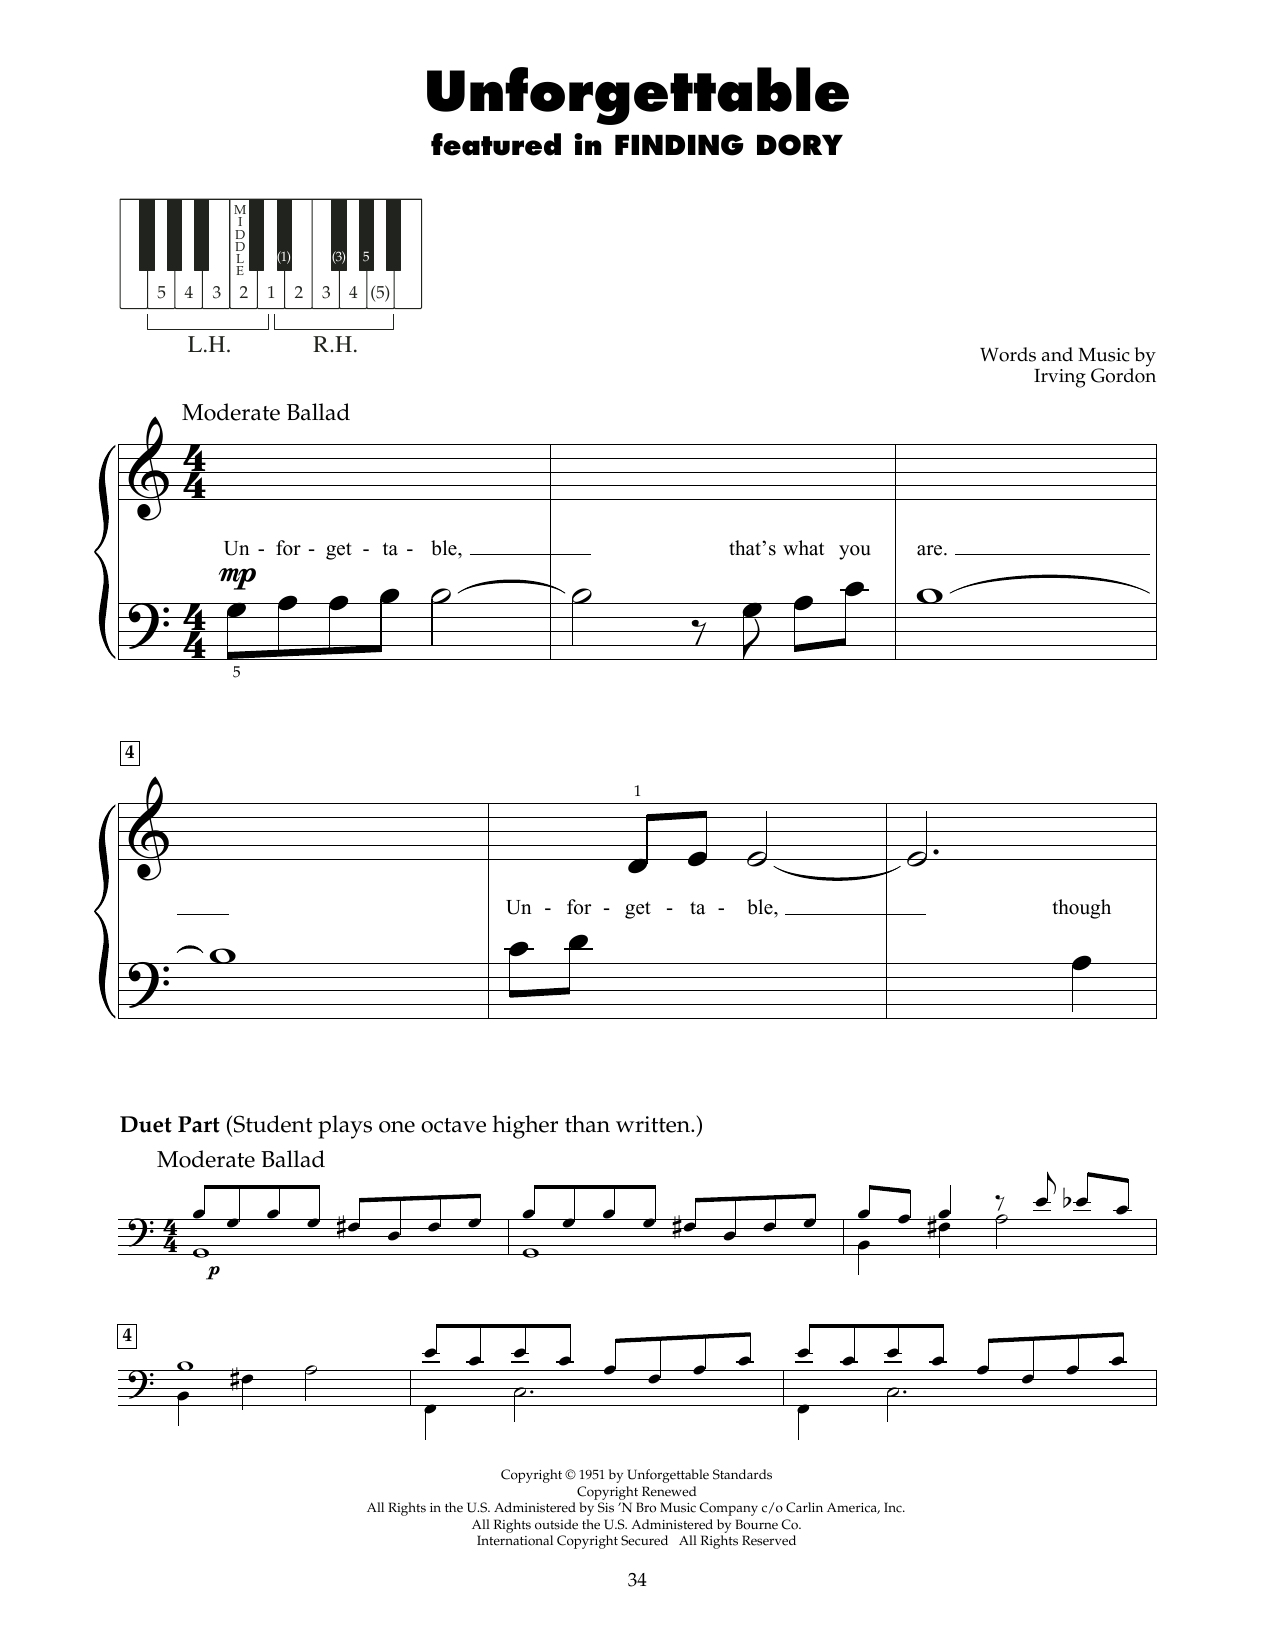 Nat King Cole Unforgettable sheet music notes printable PDF score